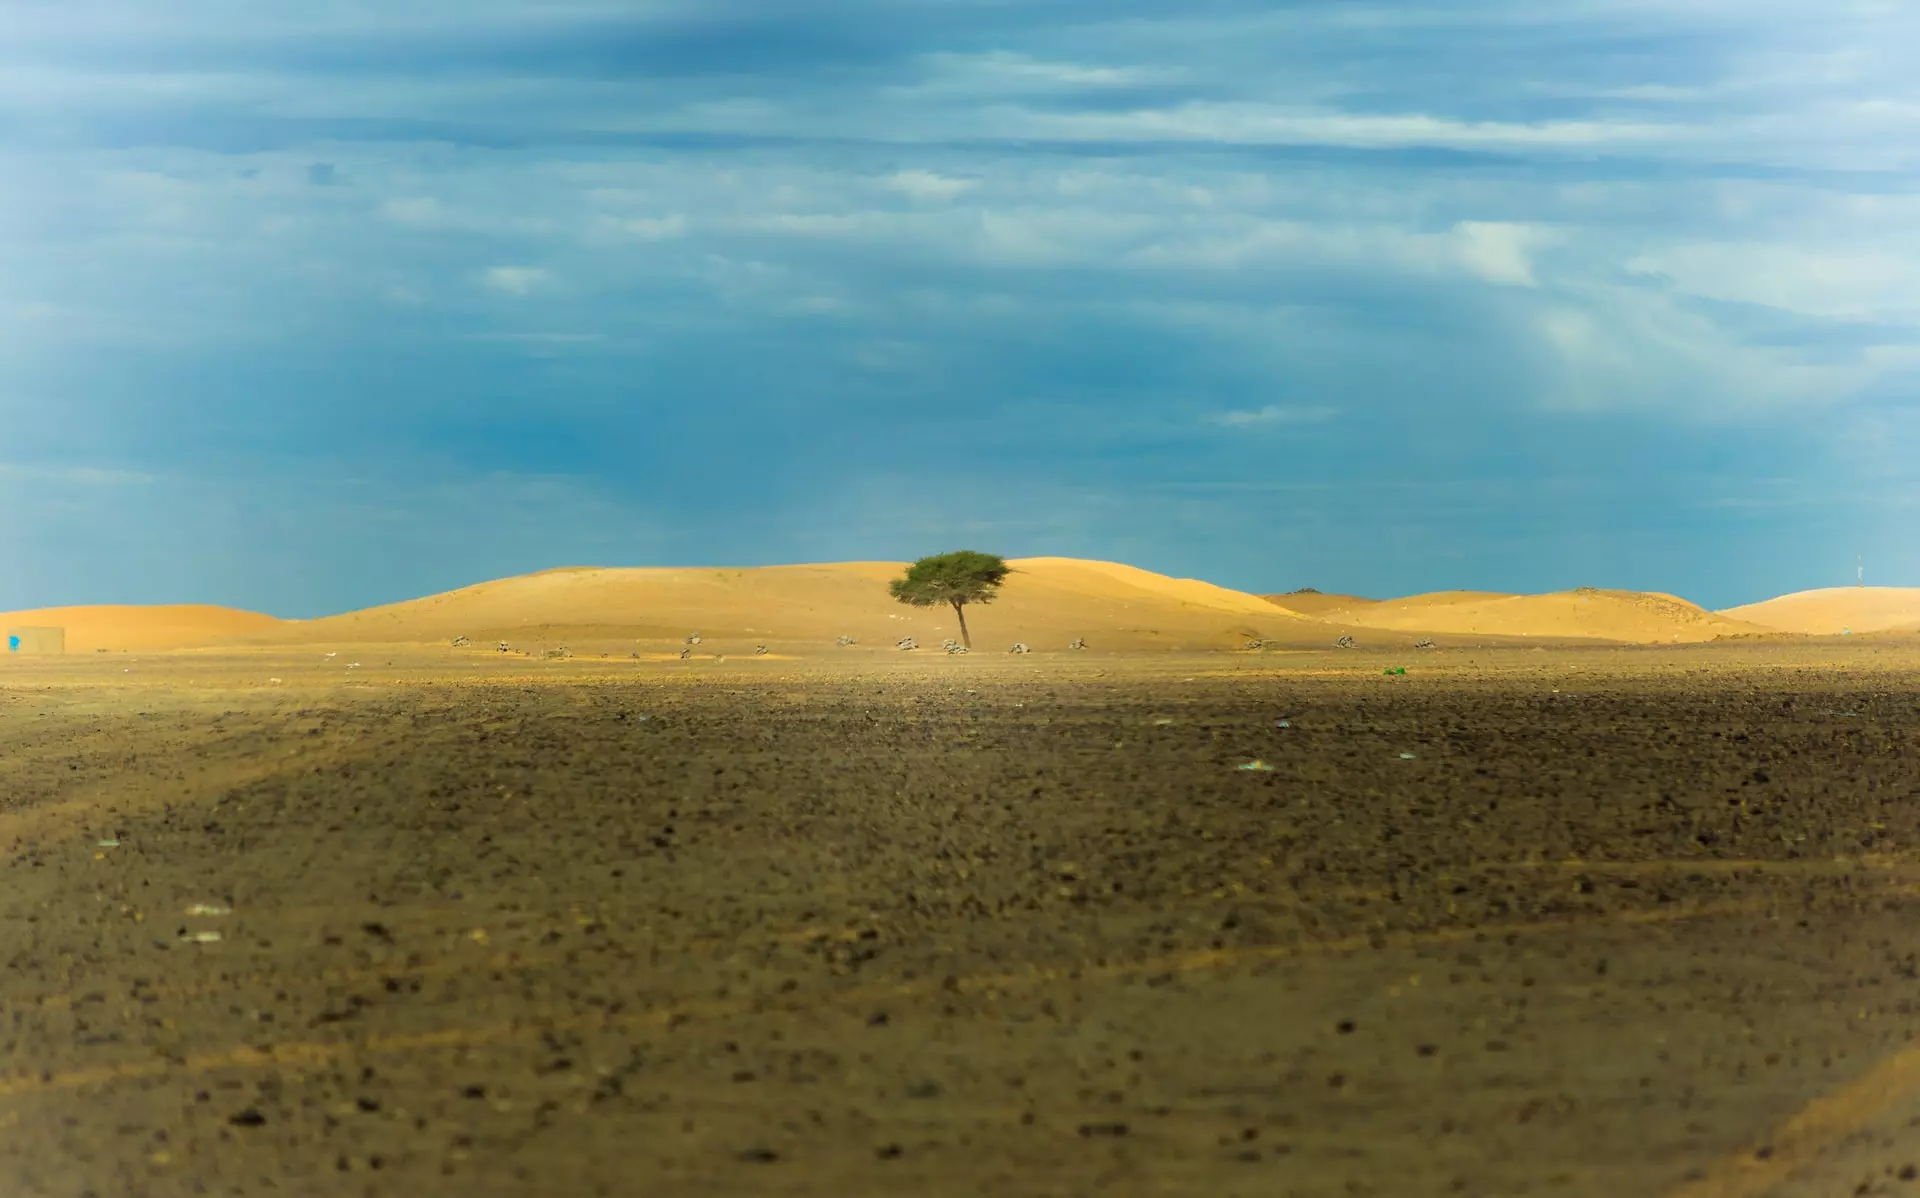 A lone tree in a desert